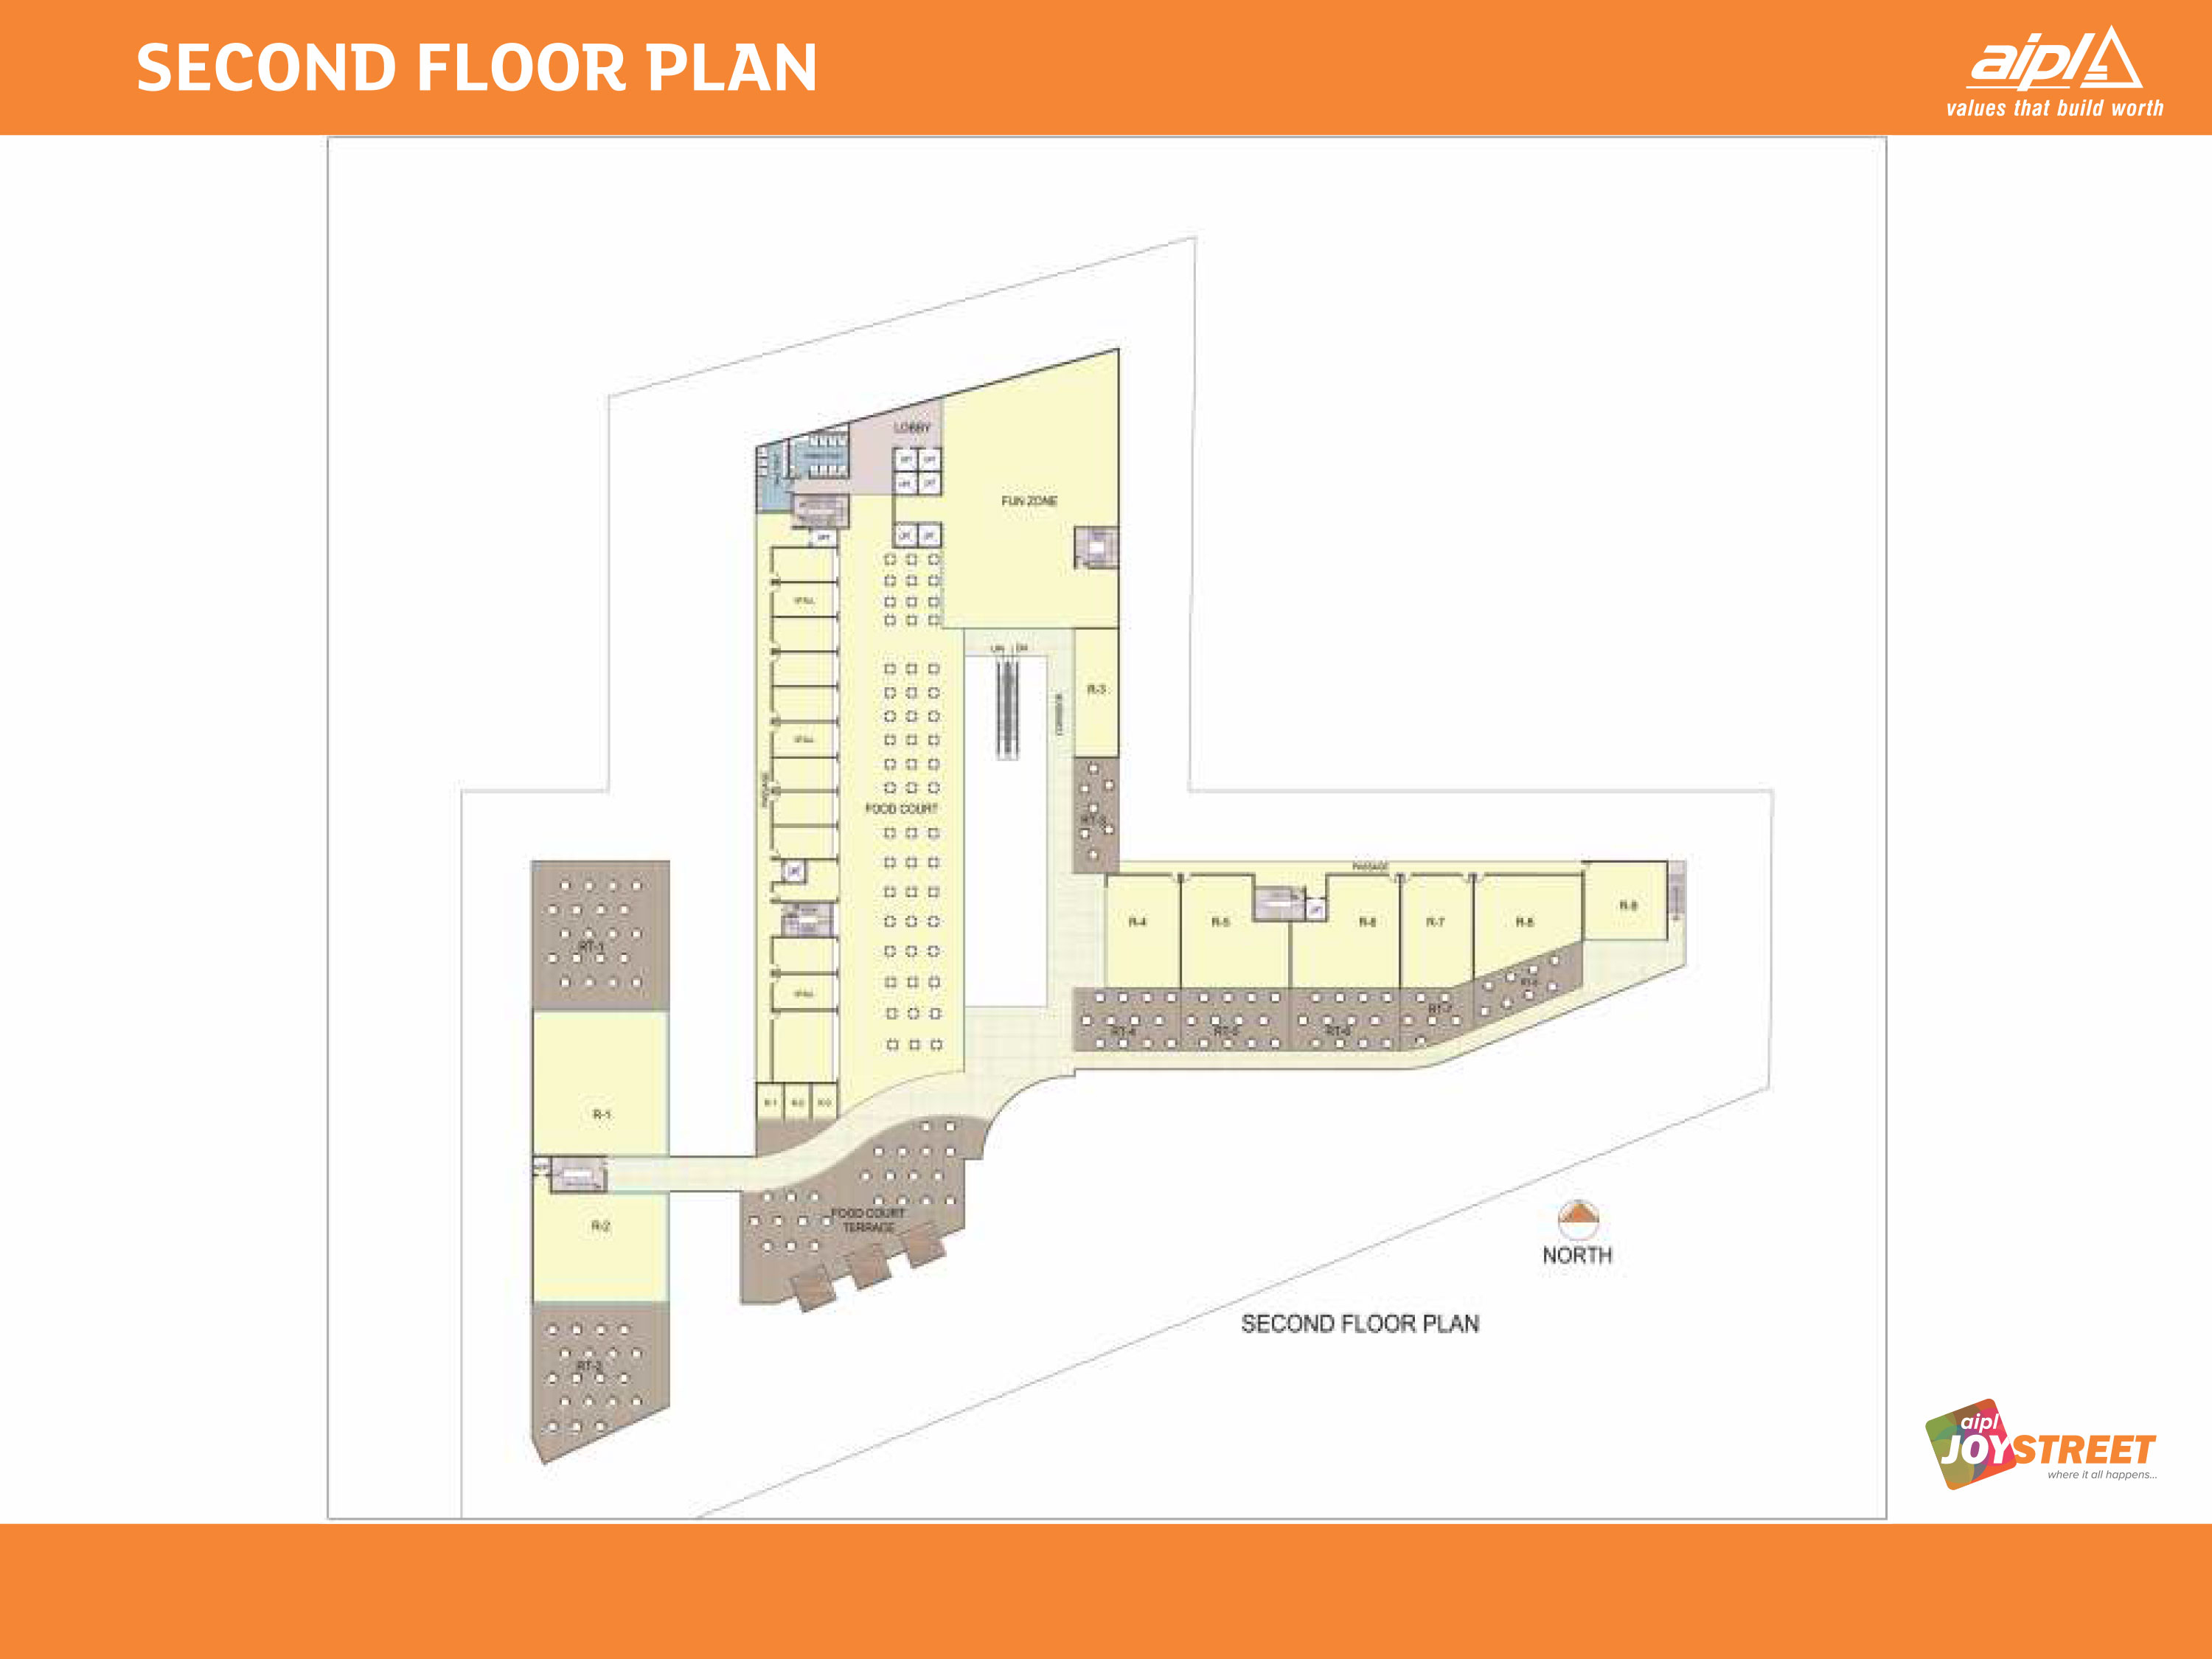 AIPL Joy Street Floor Plans